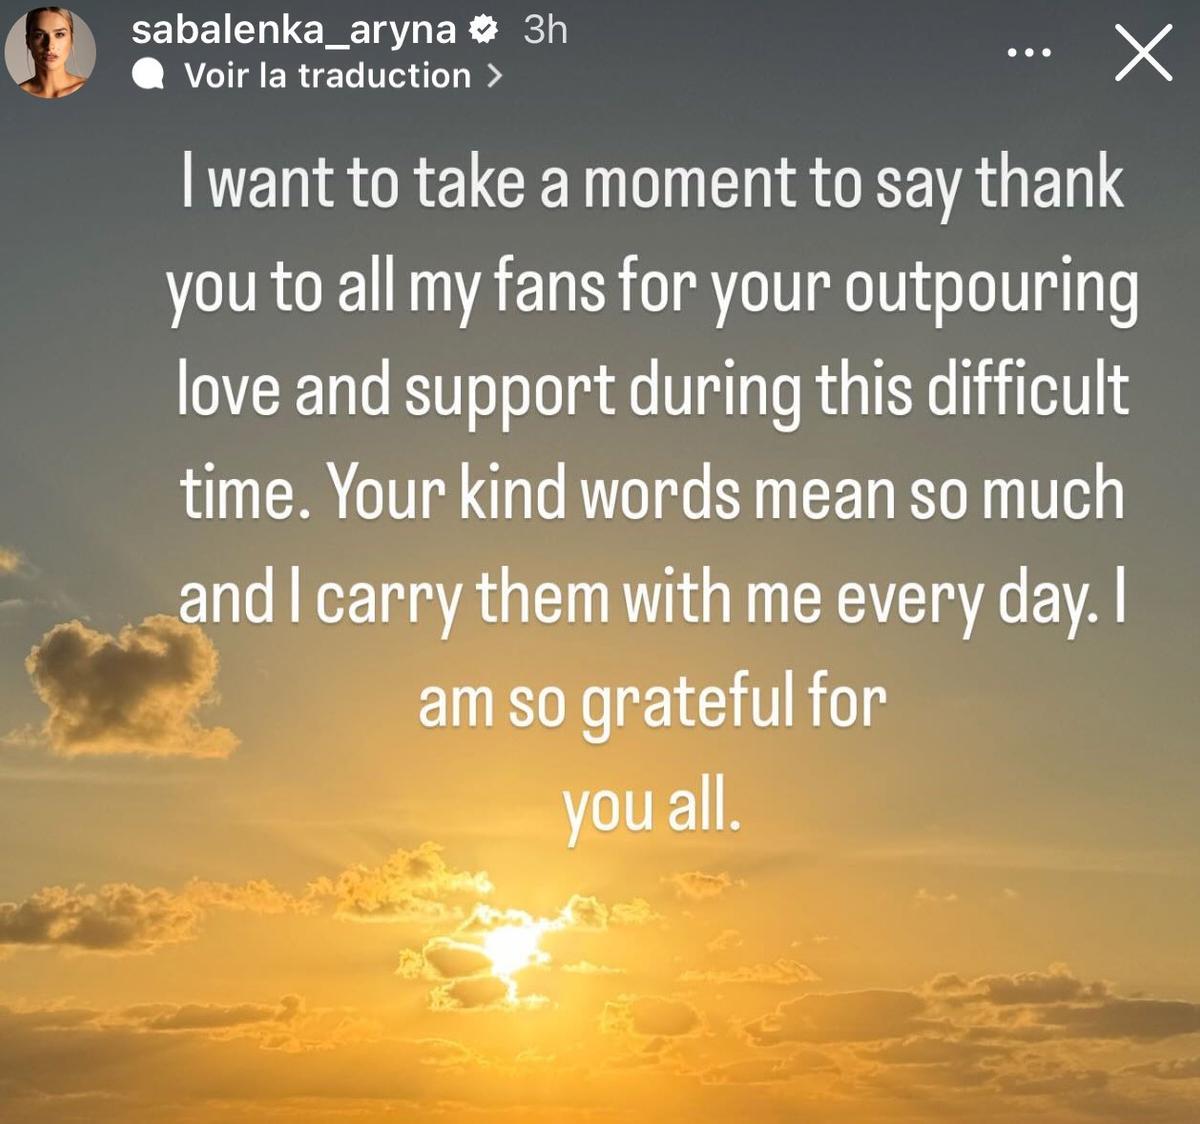 Sabalenka manda un mensaje a sus fans en Instagram